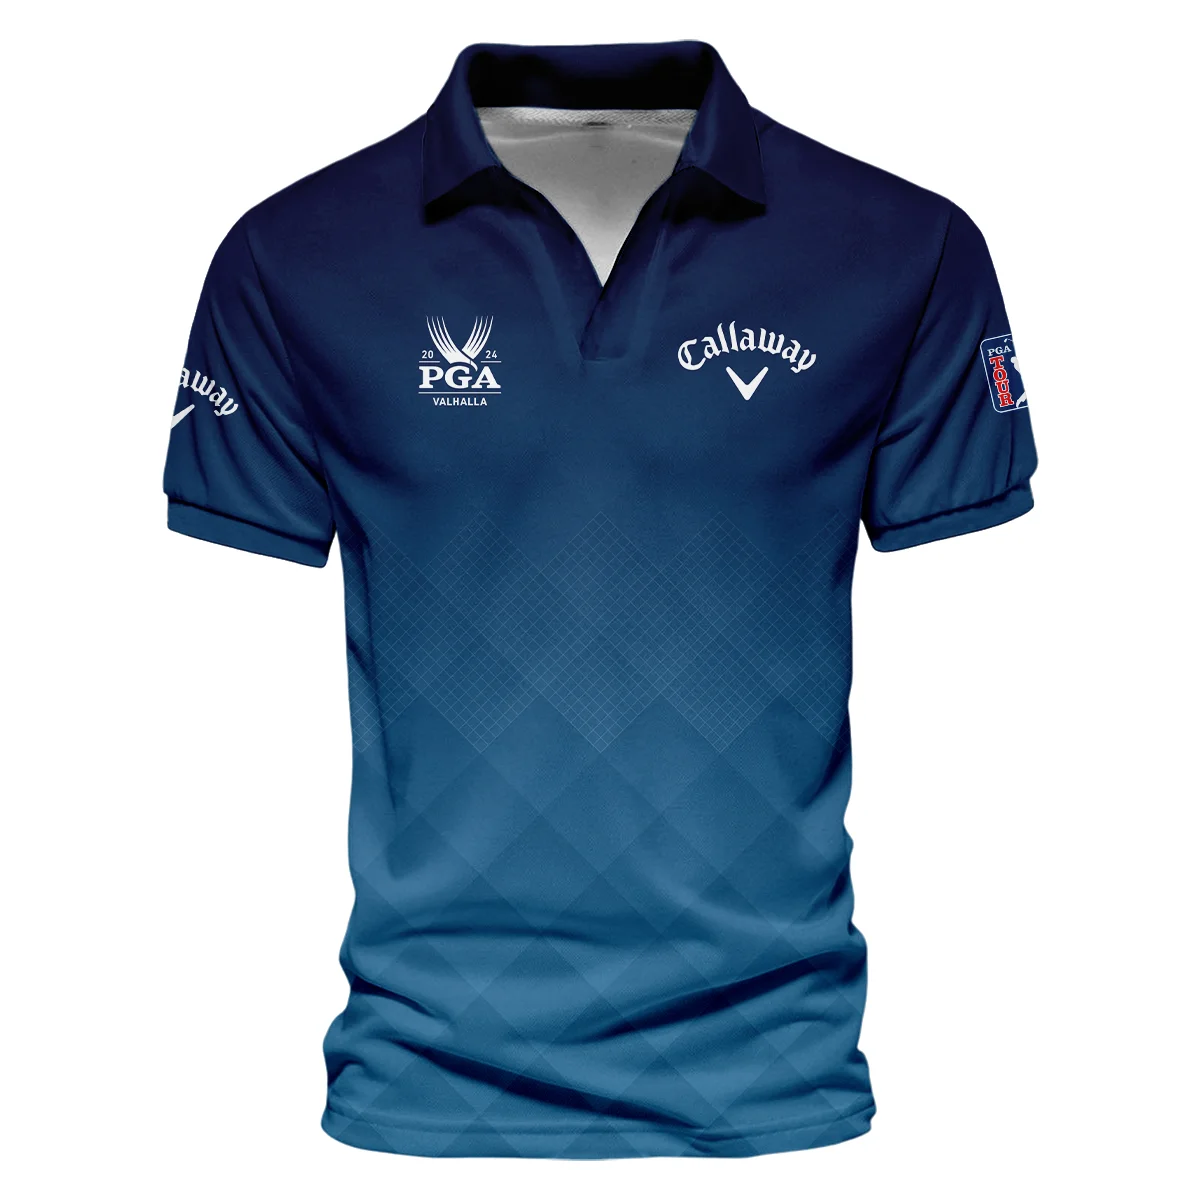 2024 PGA Championship Valhalla Callaway Blue Gradient Abstract Stripes  Sleeveless Jacket Style Classic Sleeveless Jacket